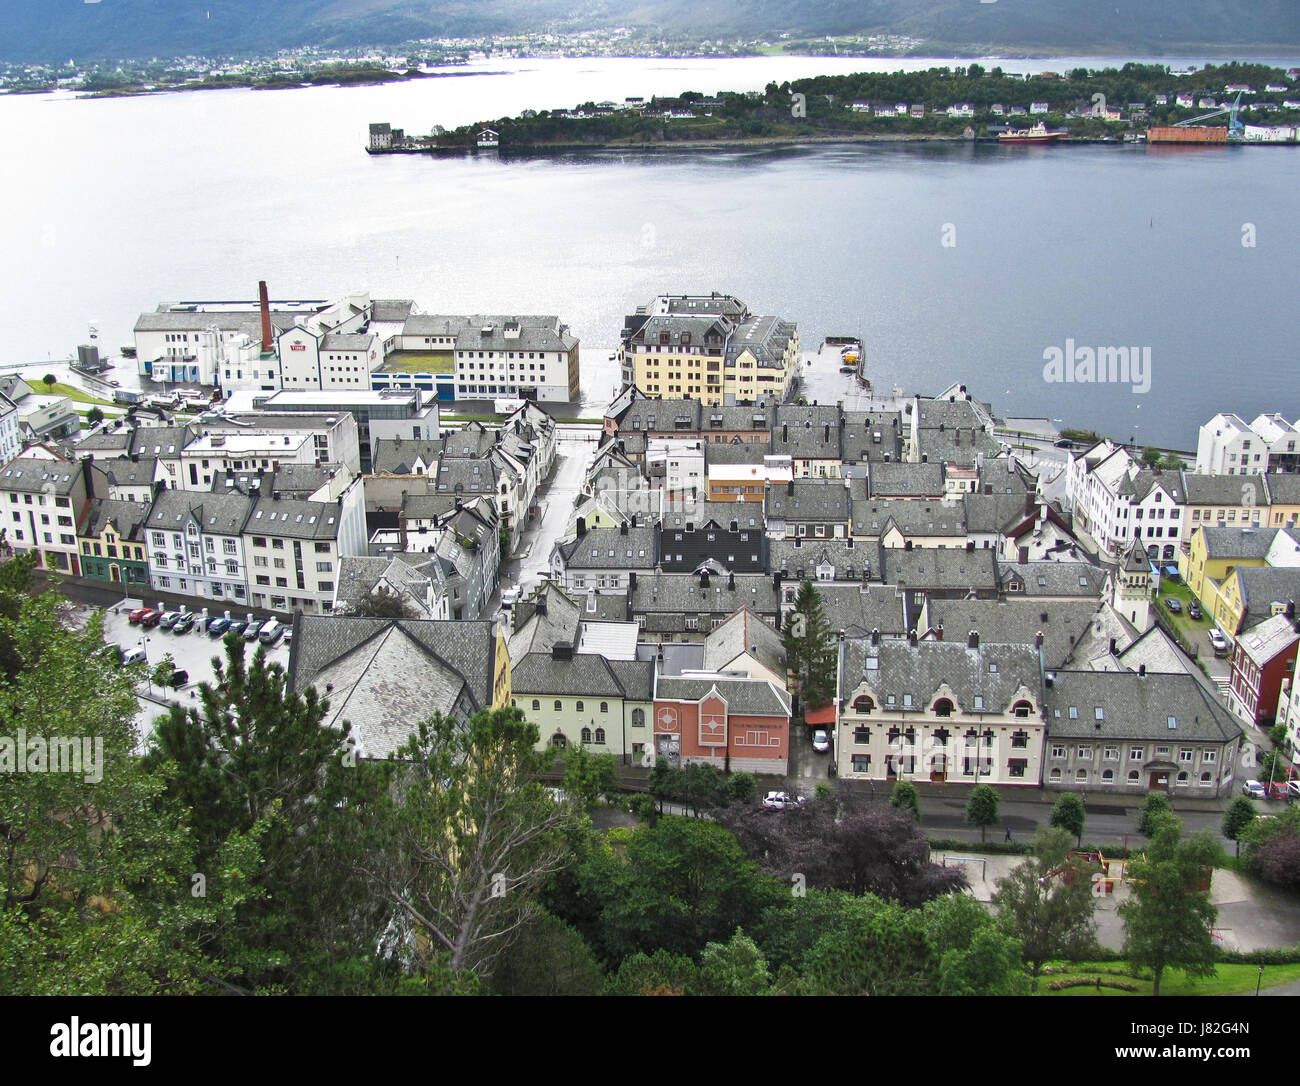 Aerial view of city, Alesund, Norway. Stock Photo